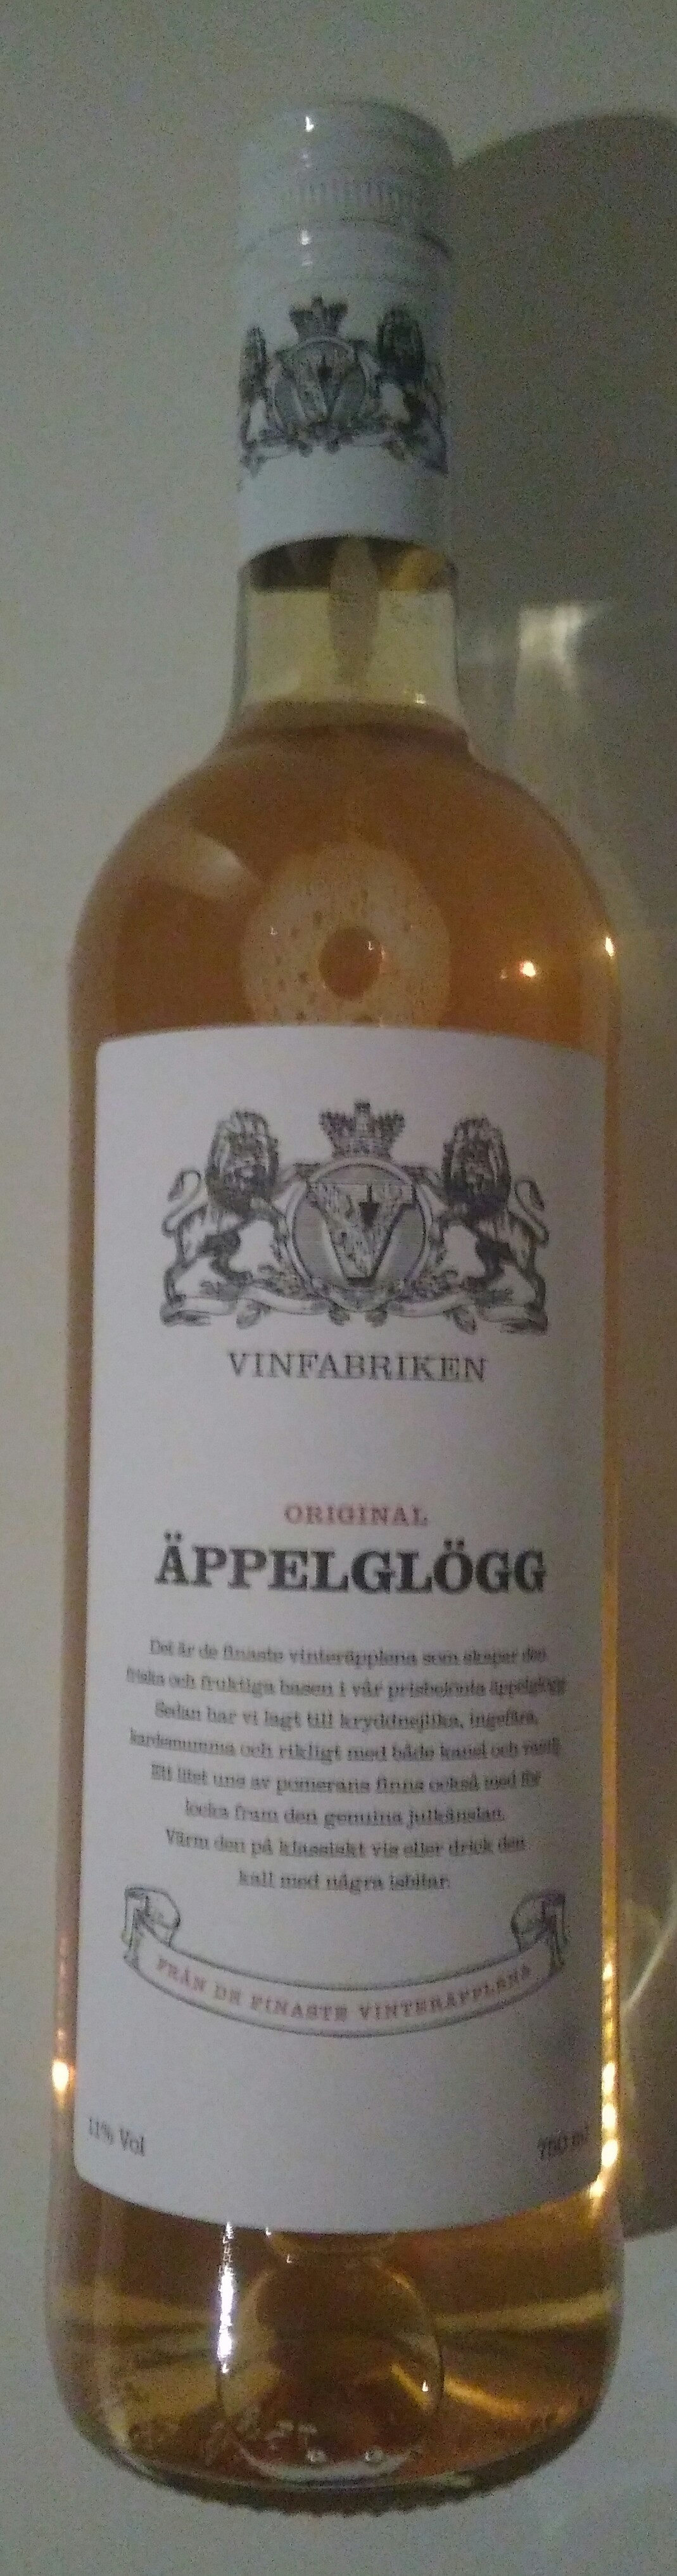 Original Äppelglögg - Produkt - fr